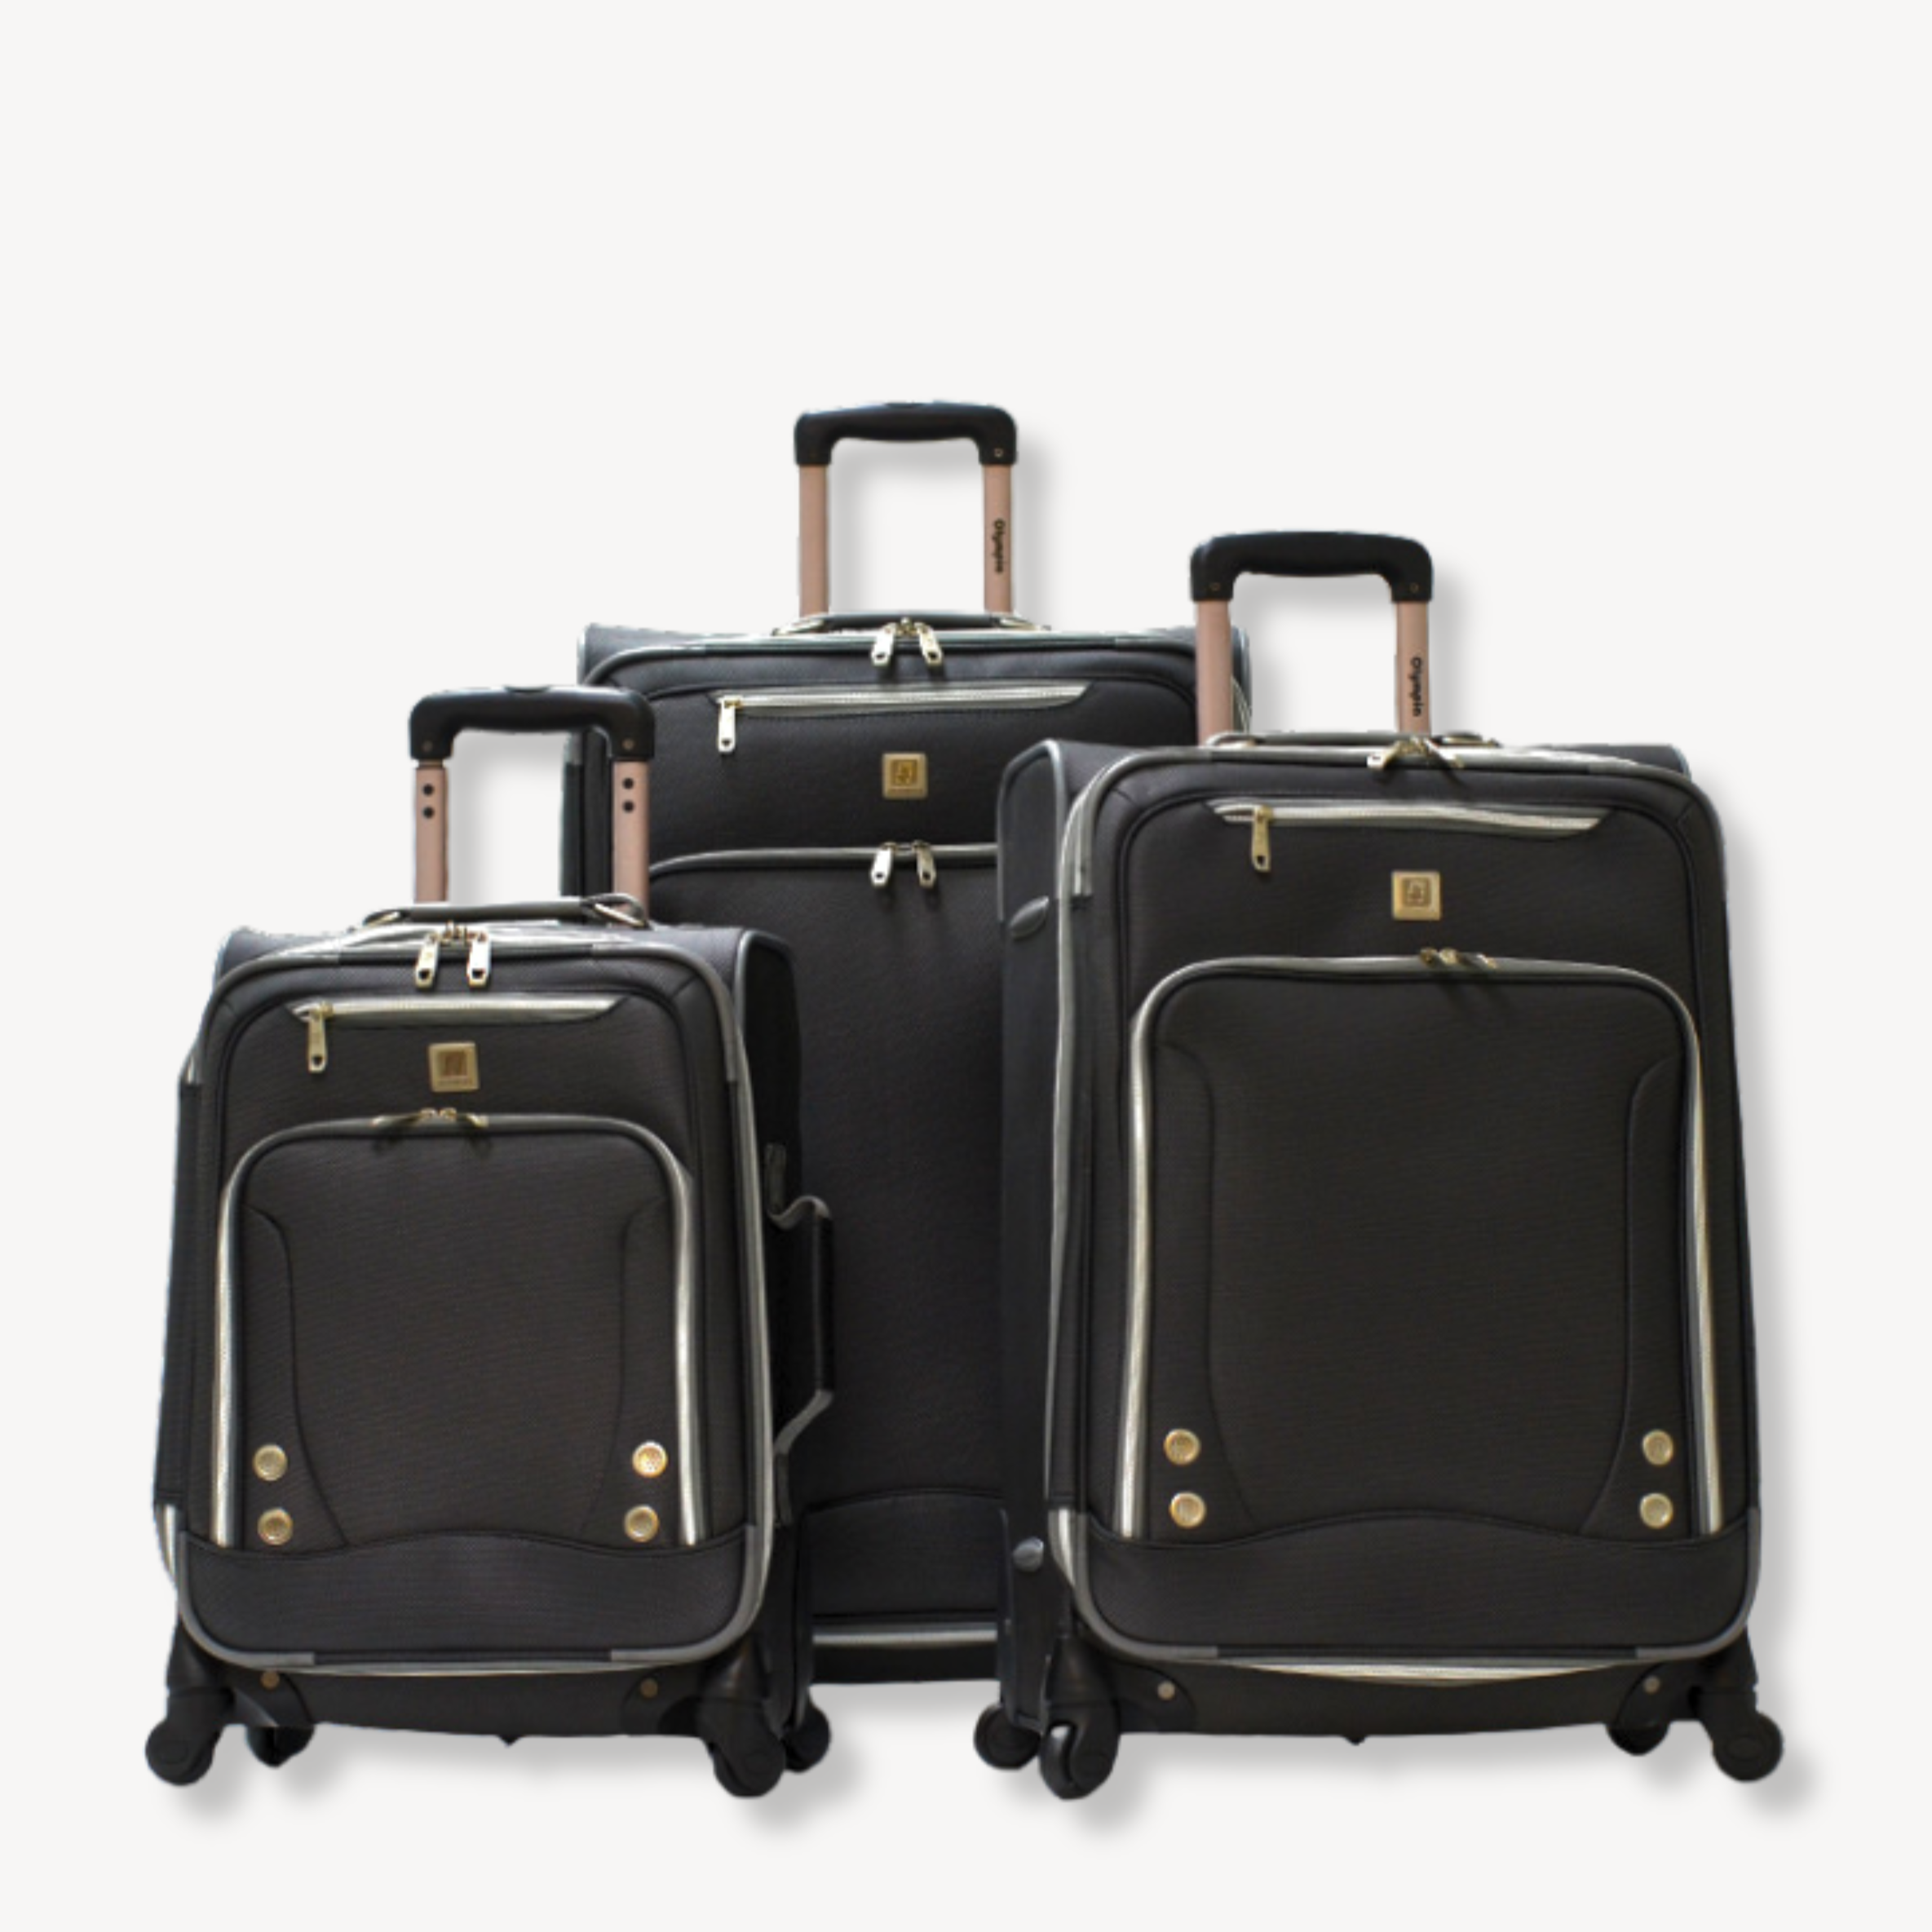 Skyhawk Durablel, Lightweight Luggage & Travel Bag with Classic Design 3-PIECE SETS